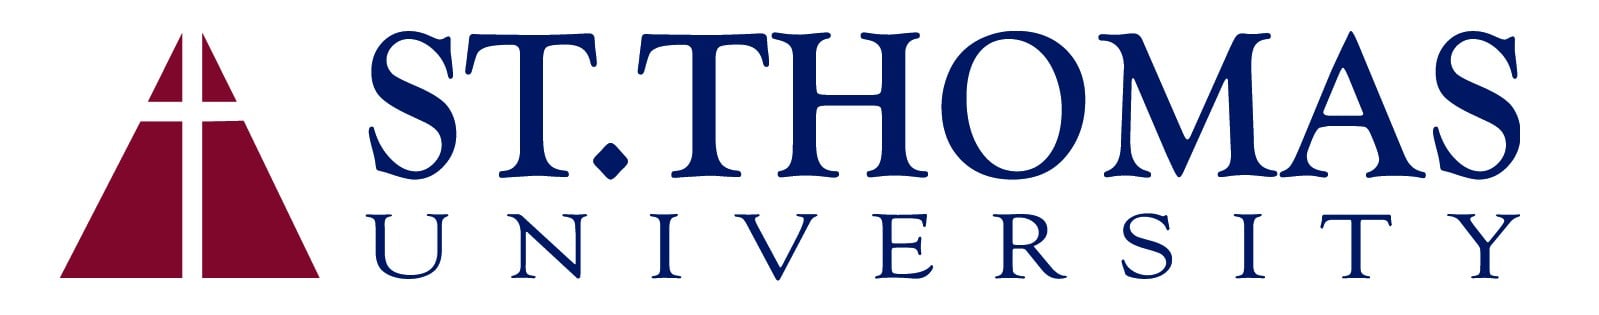 St. Thomas University Logo 2